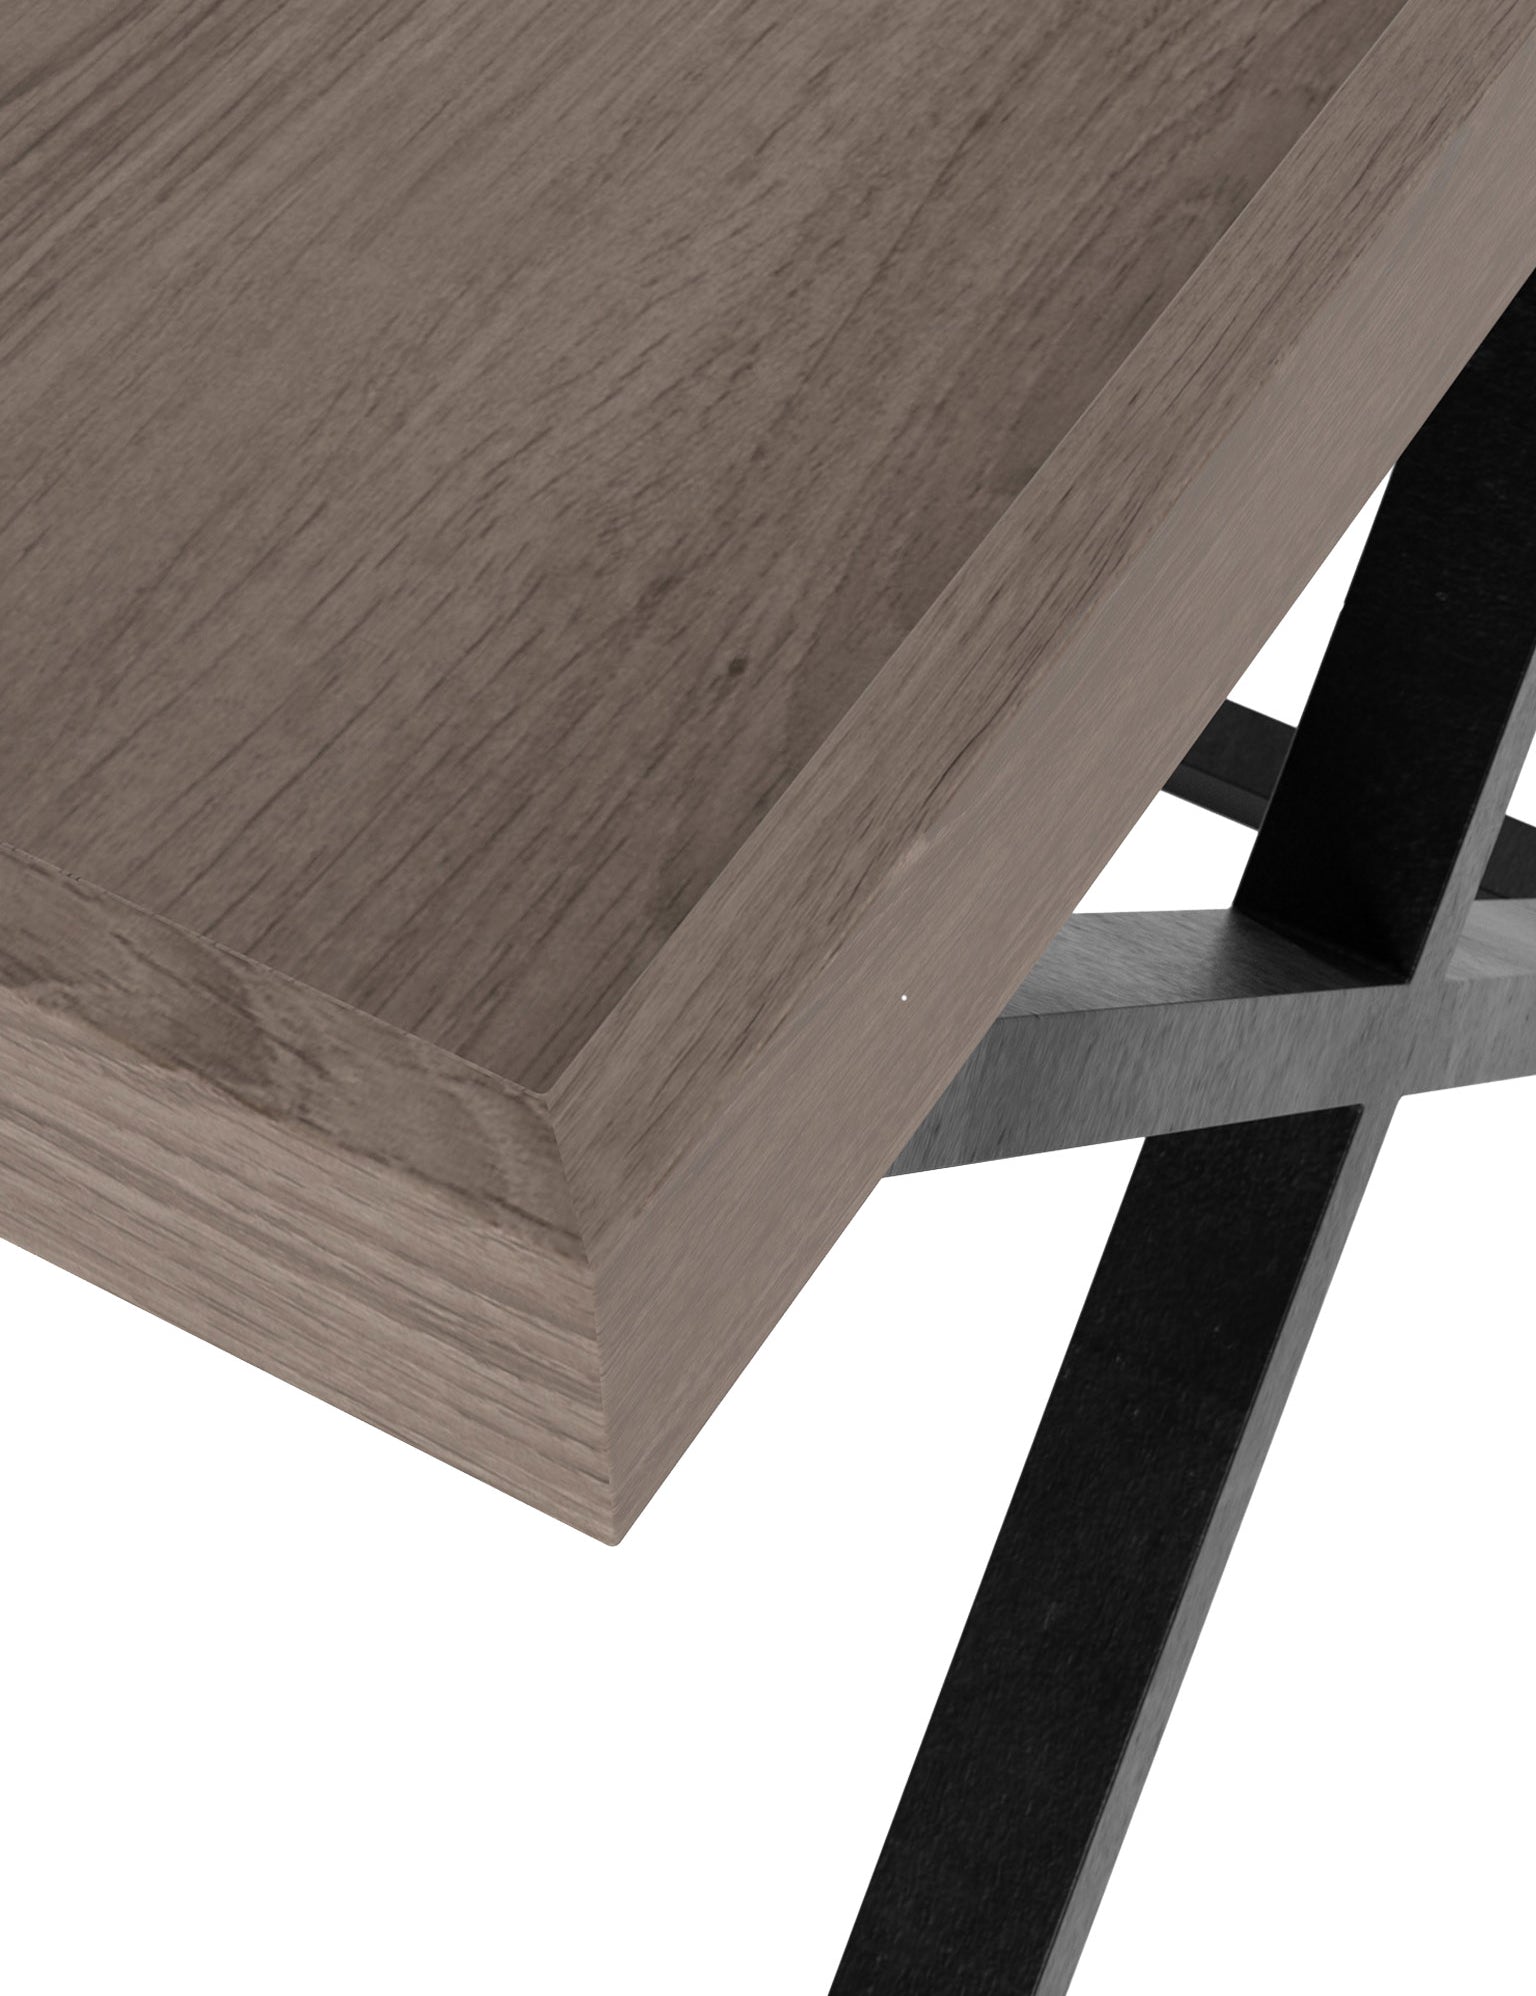 Wooden End table with black Metal crossed legs